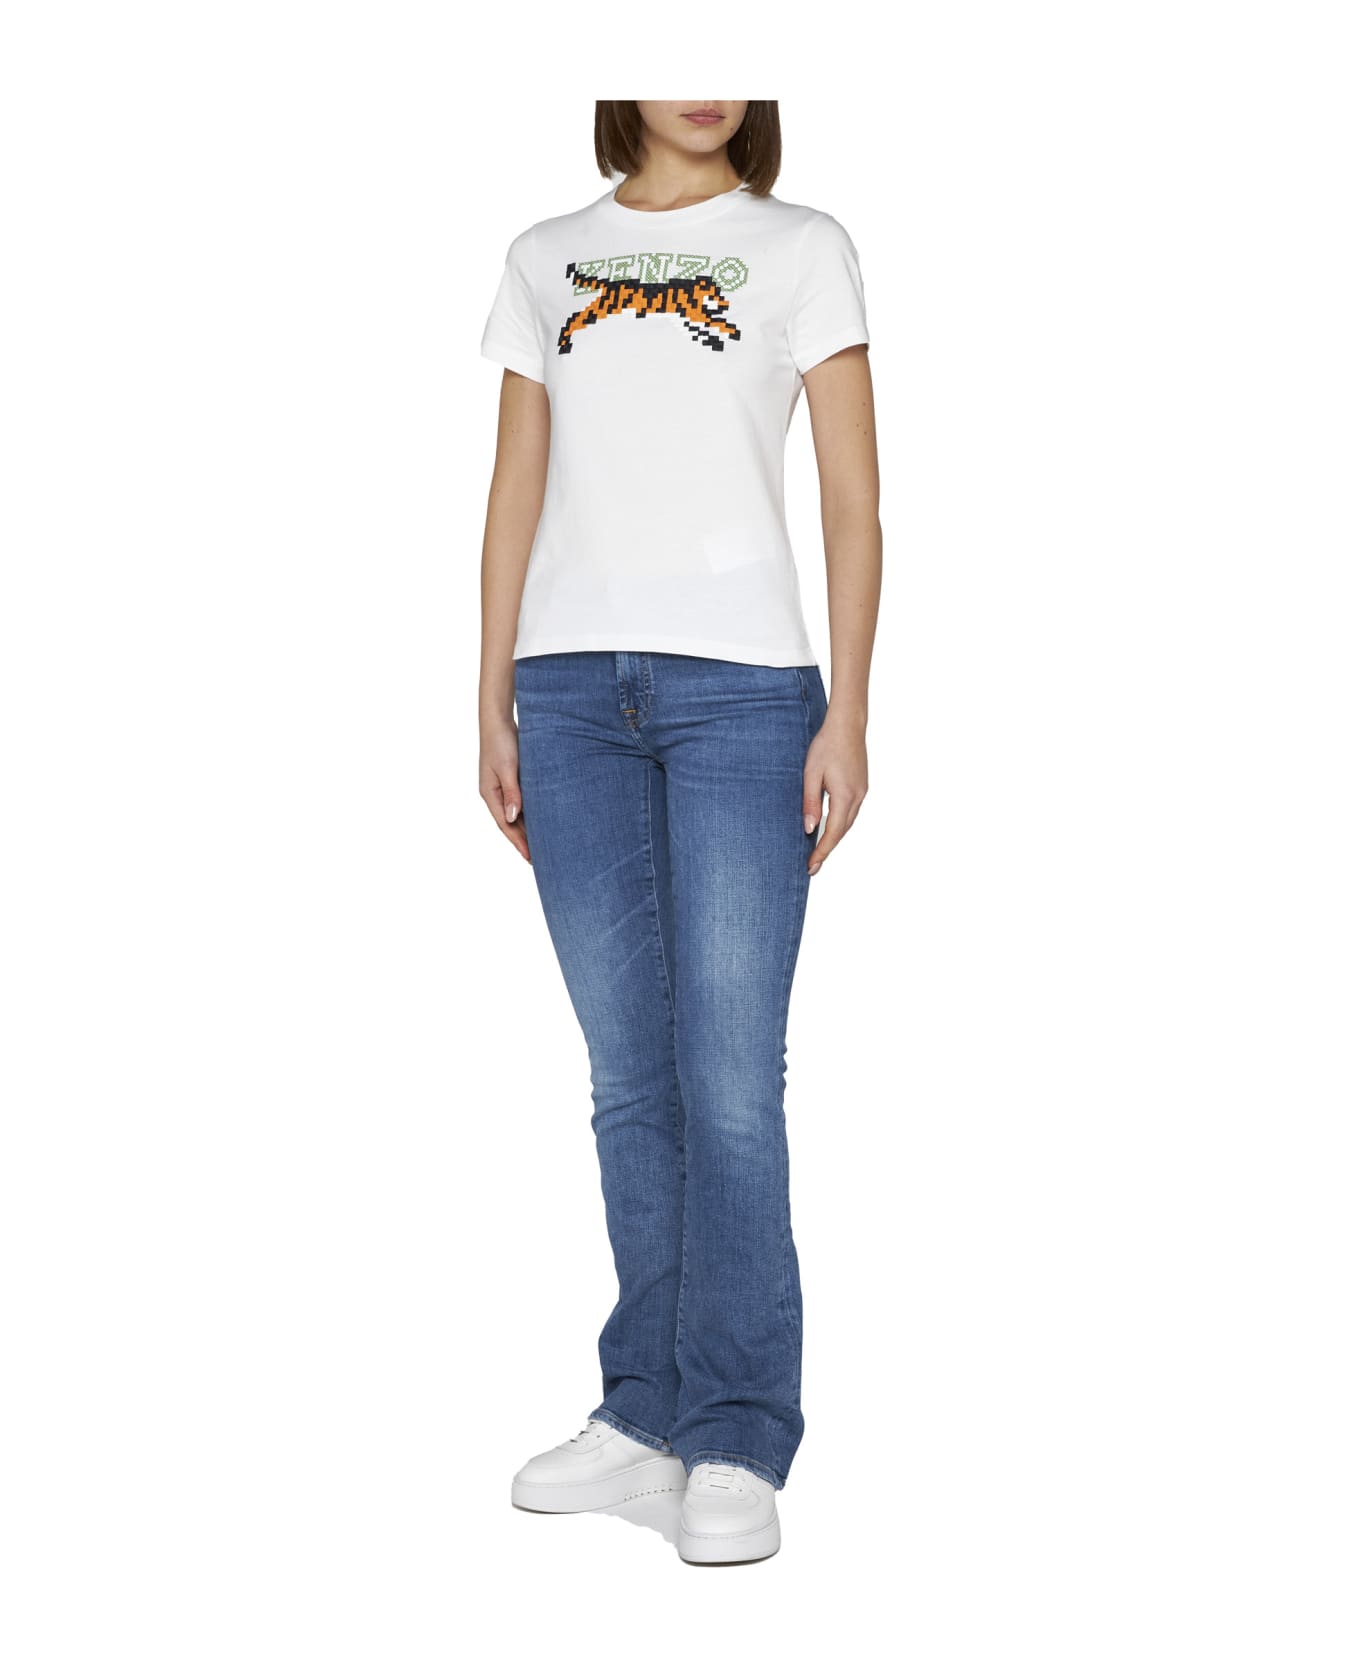 Kenzo Pixel T-shirt - White